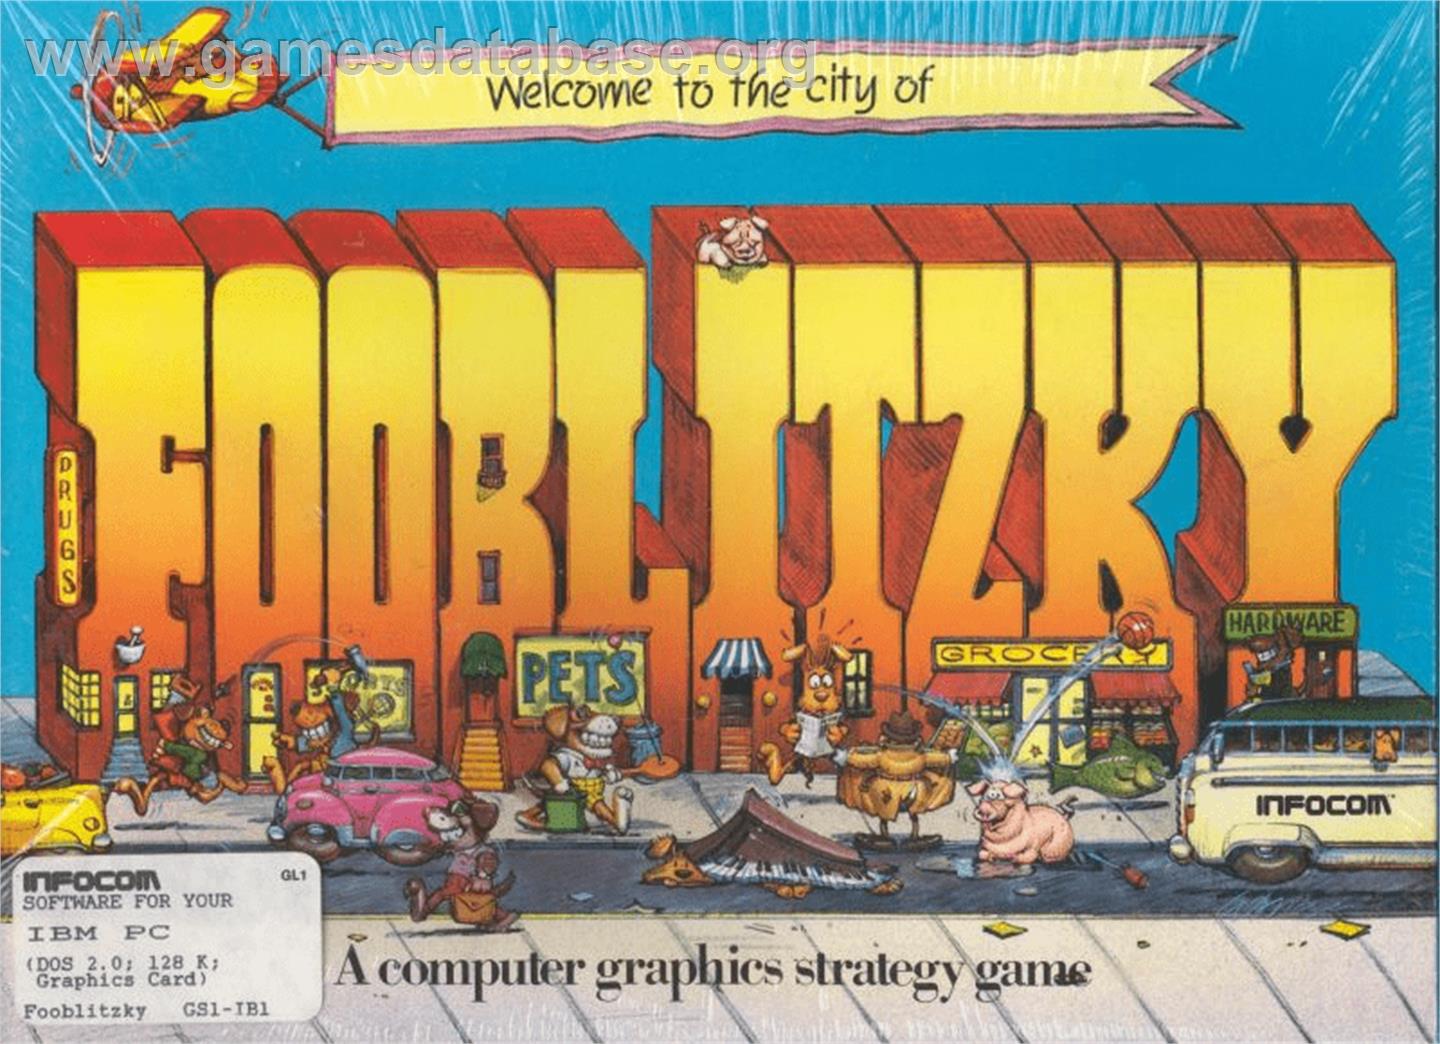 Fooblitzky - Apple II - Artwork - Box